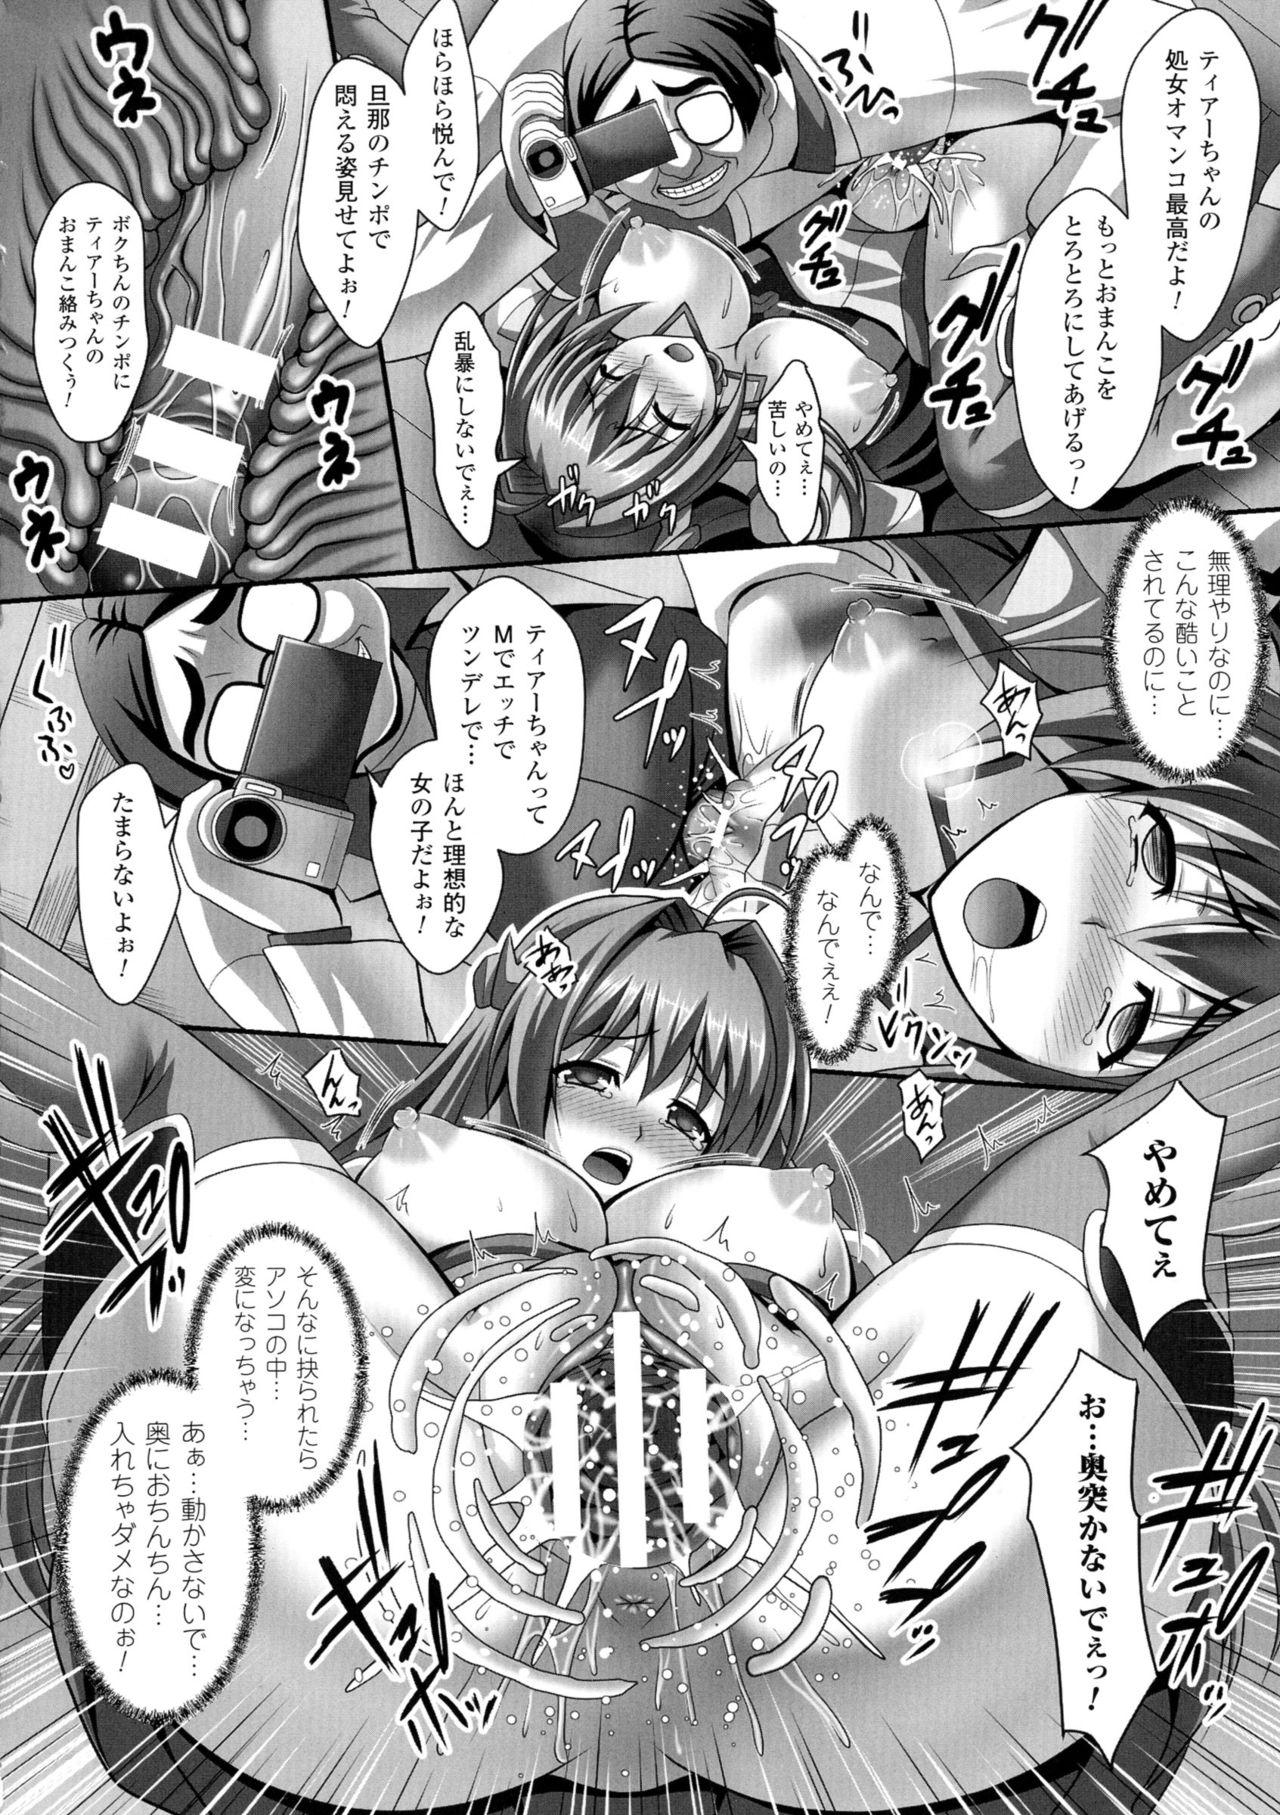 Seigi no Heroine Kangoku File DX Vol. 3 19